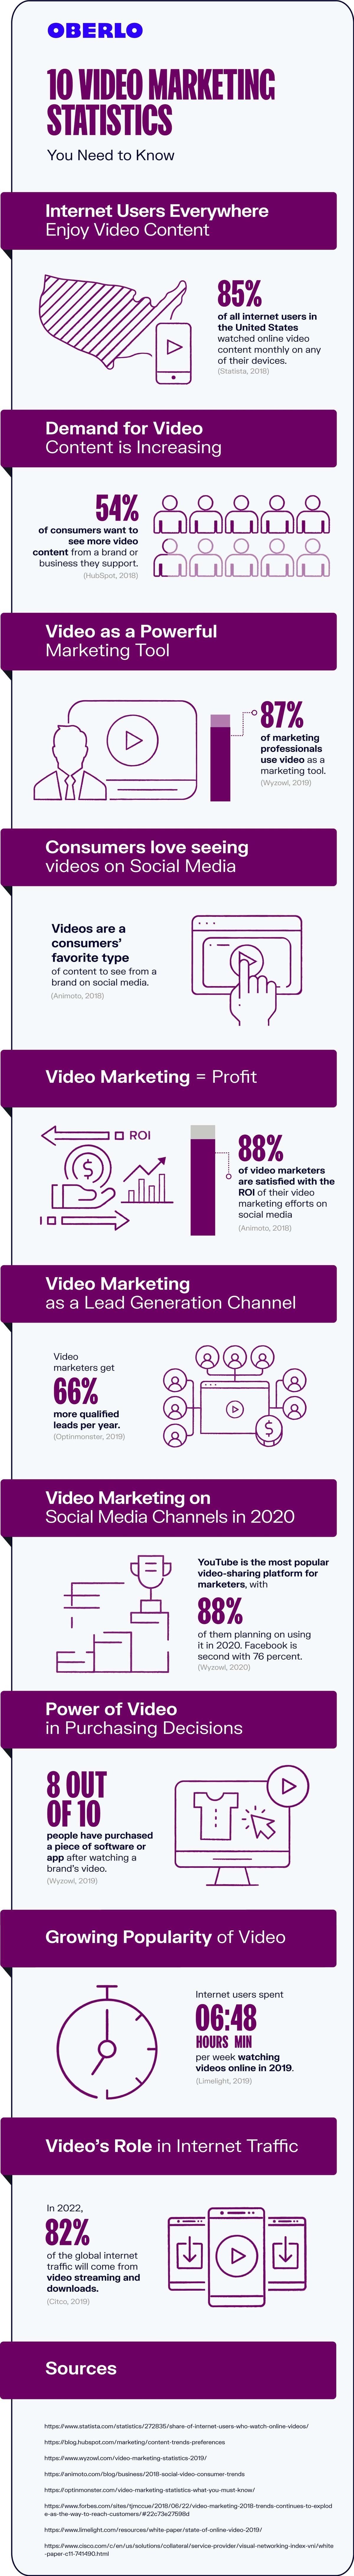 वीडियो मार्केटिंग सांख्यिकी 2020